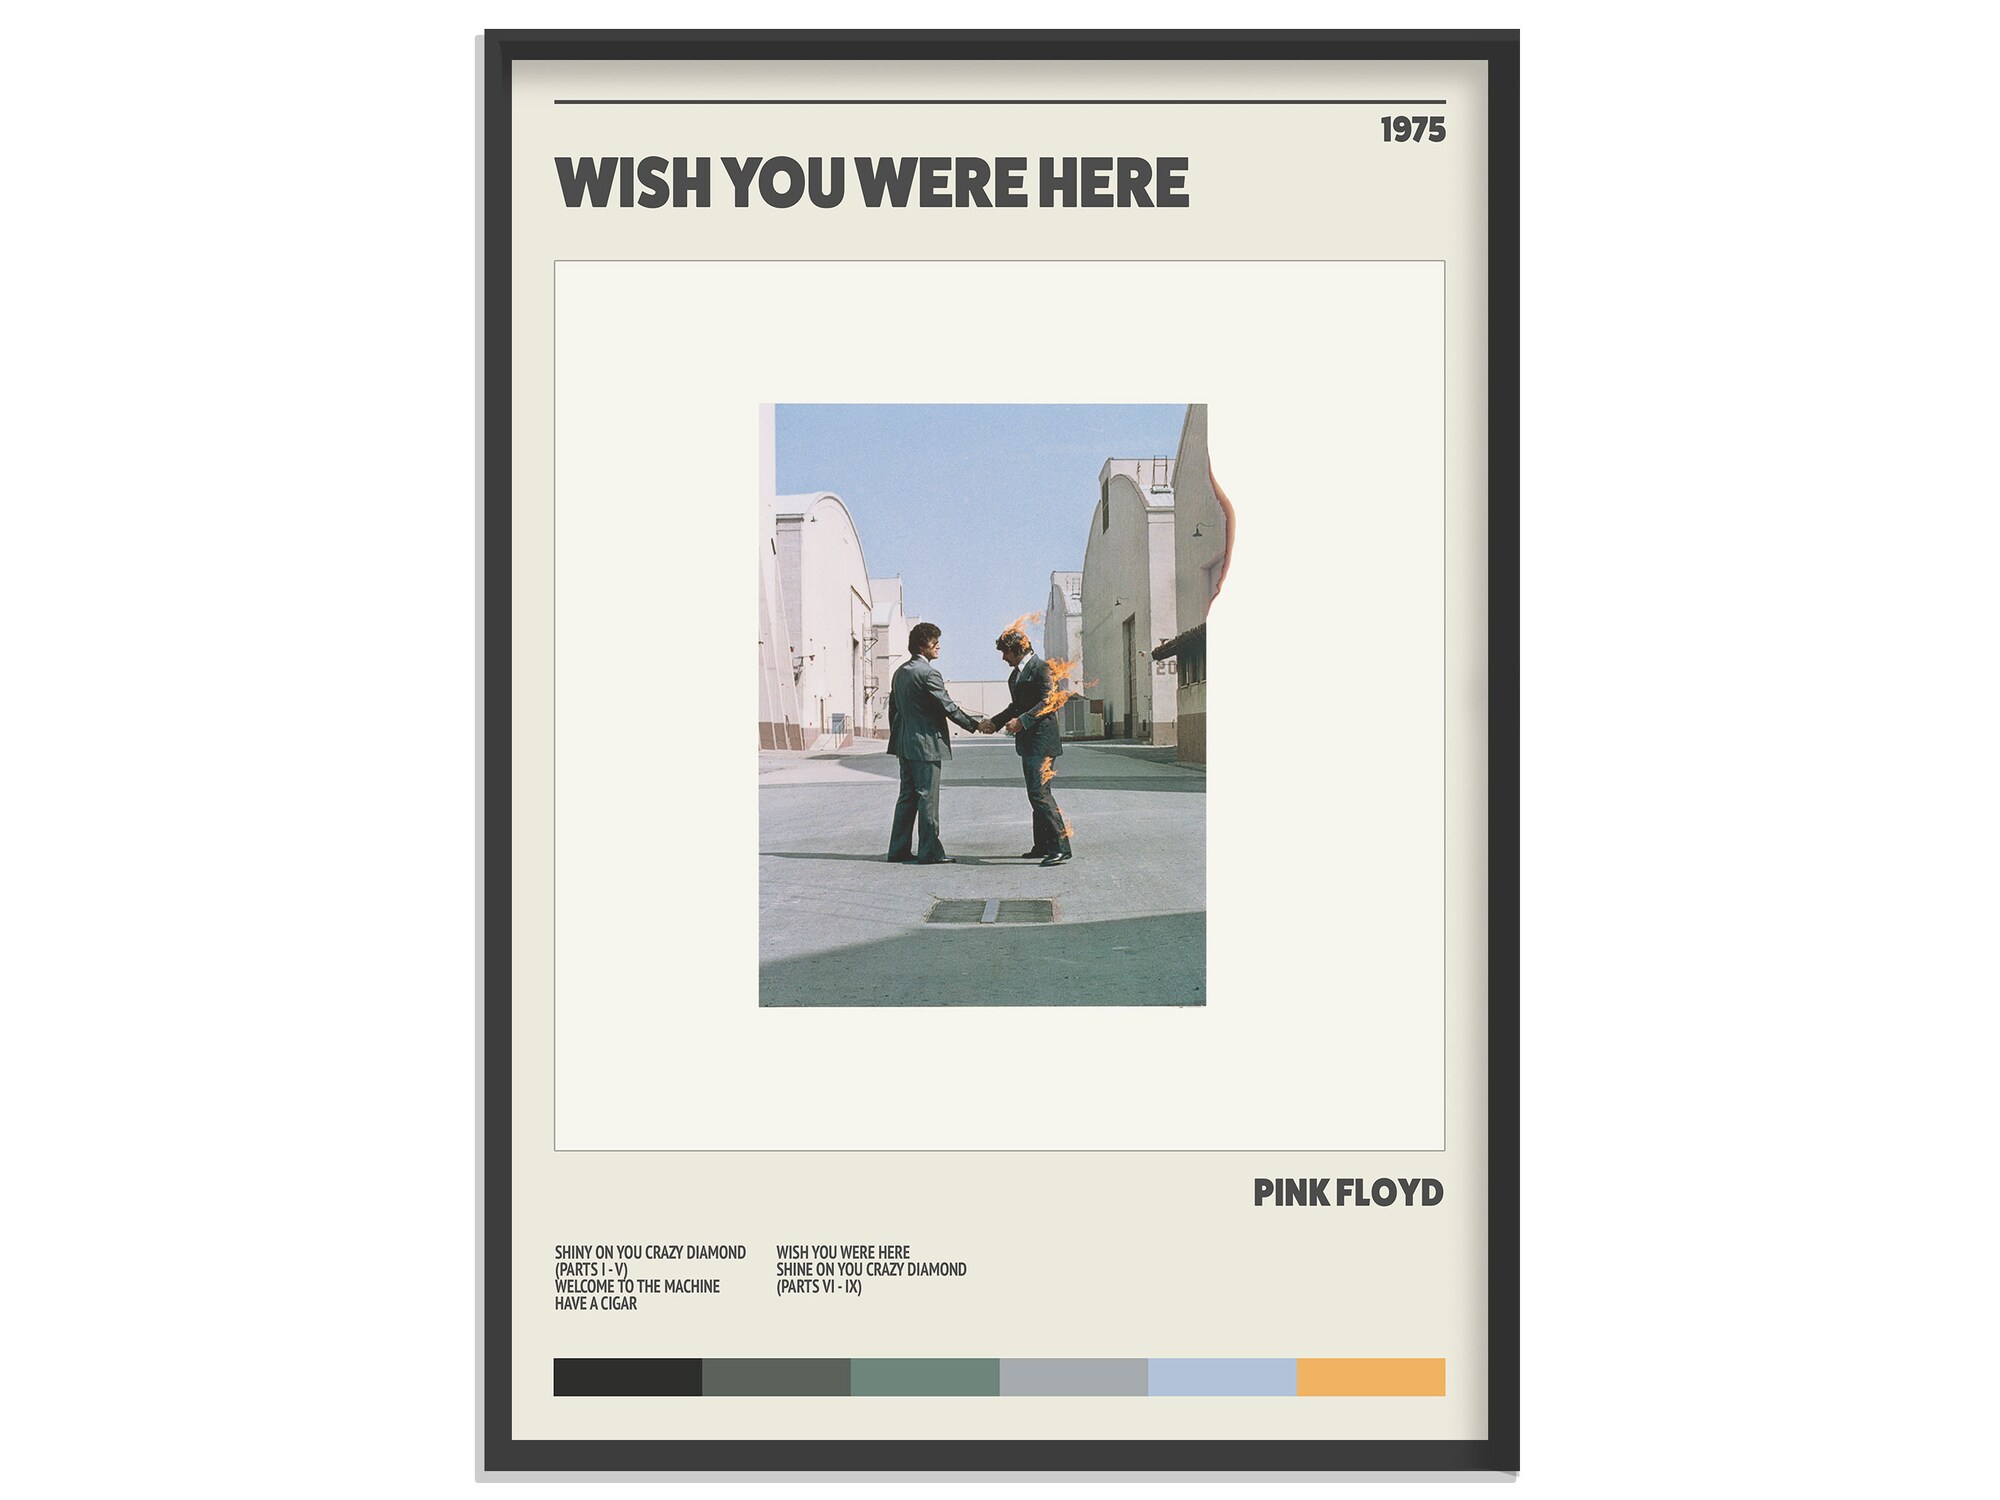 Pink Floyd - Wish You Were Here - Retro Album Print | Music Poster